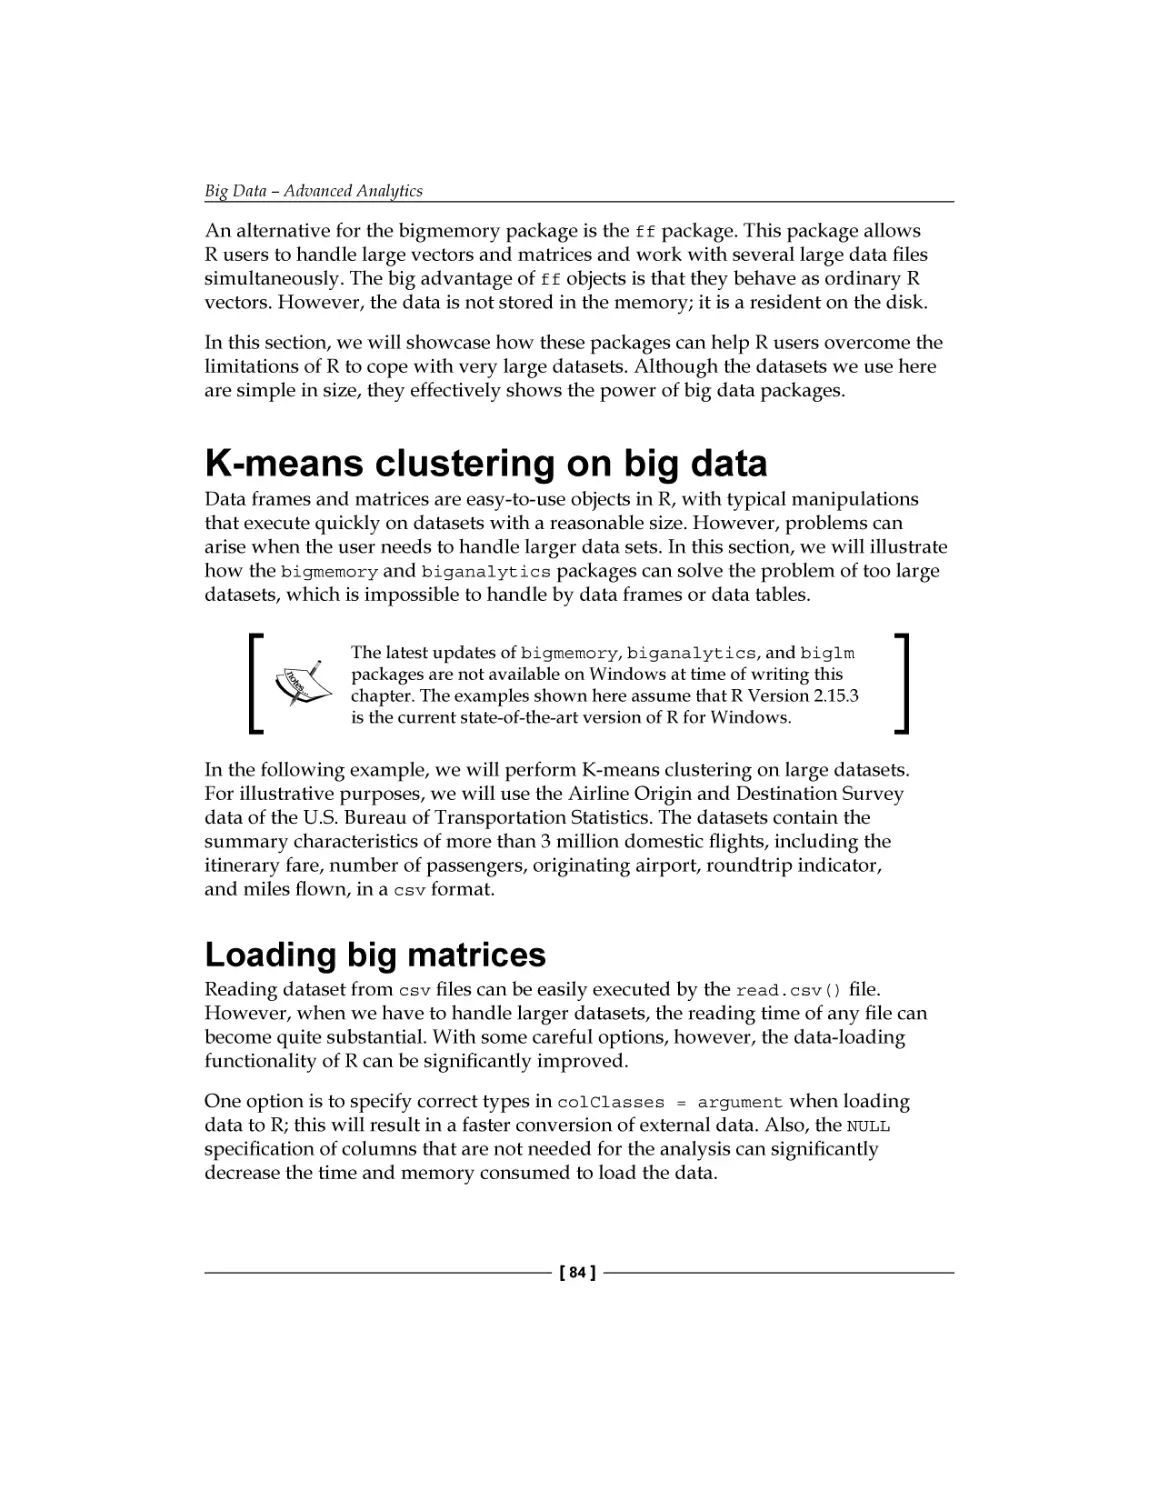 K-means clustering on big data
Loading big matrices